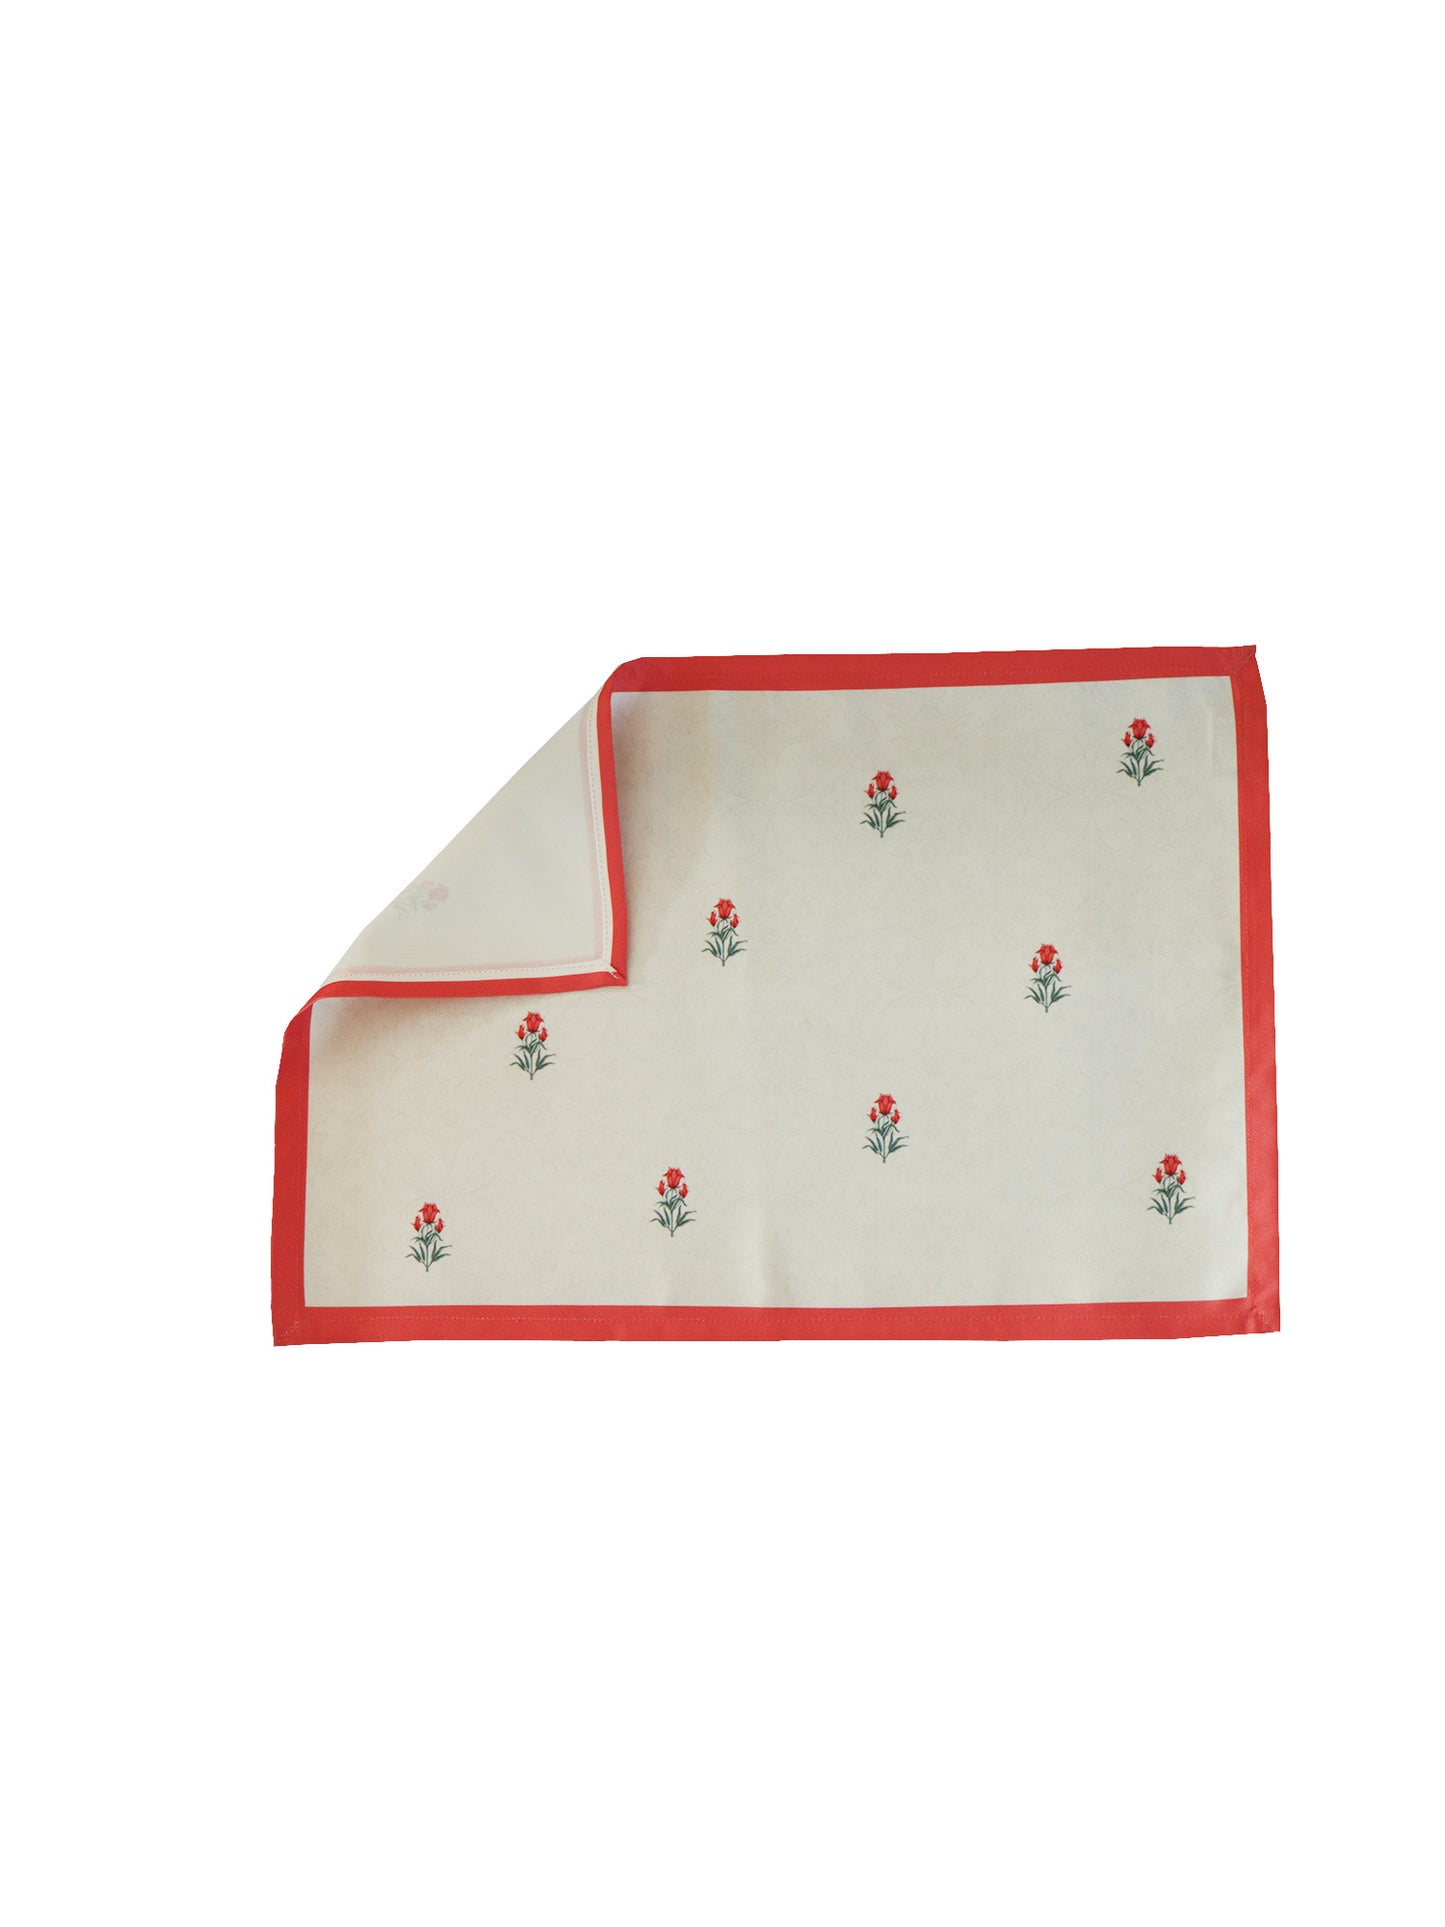 printed motif table mats, set of 6- 13x19 inch